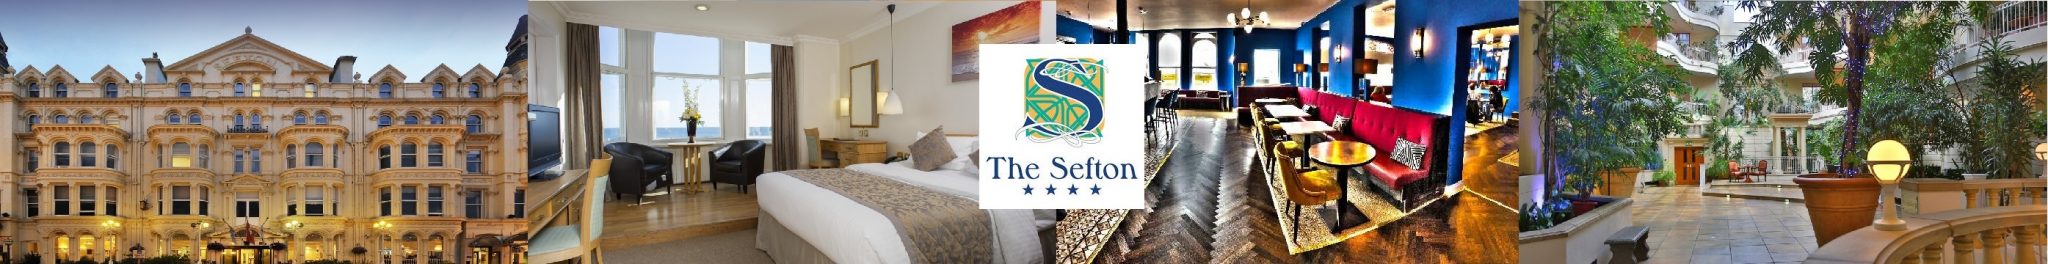 Sefton Hotel Isle of Man TT